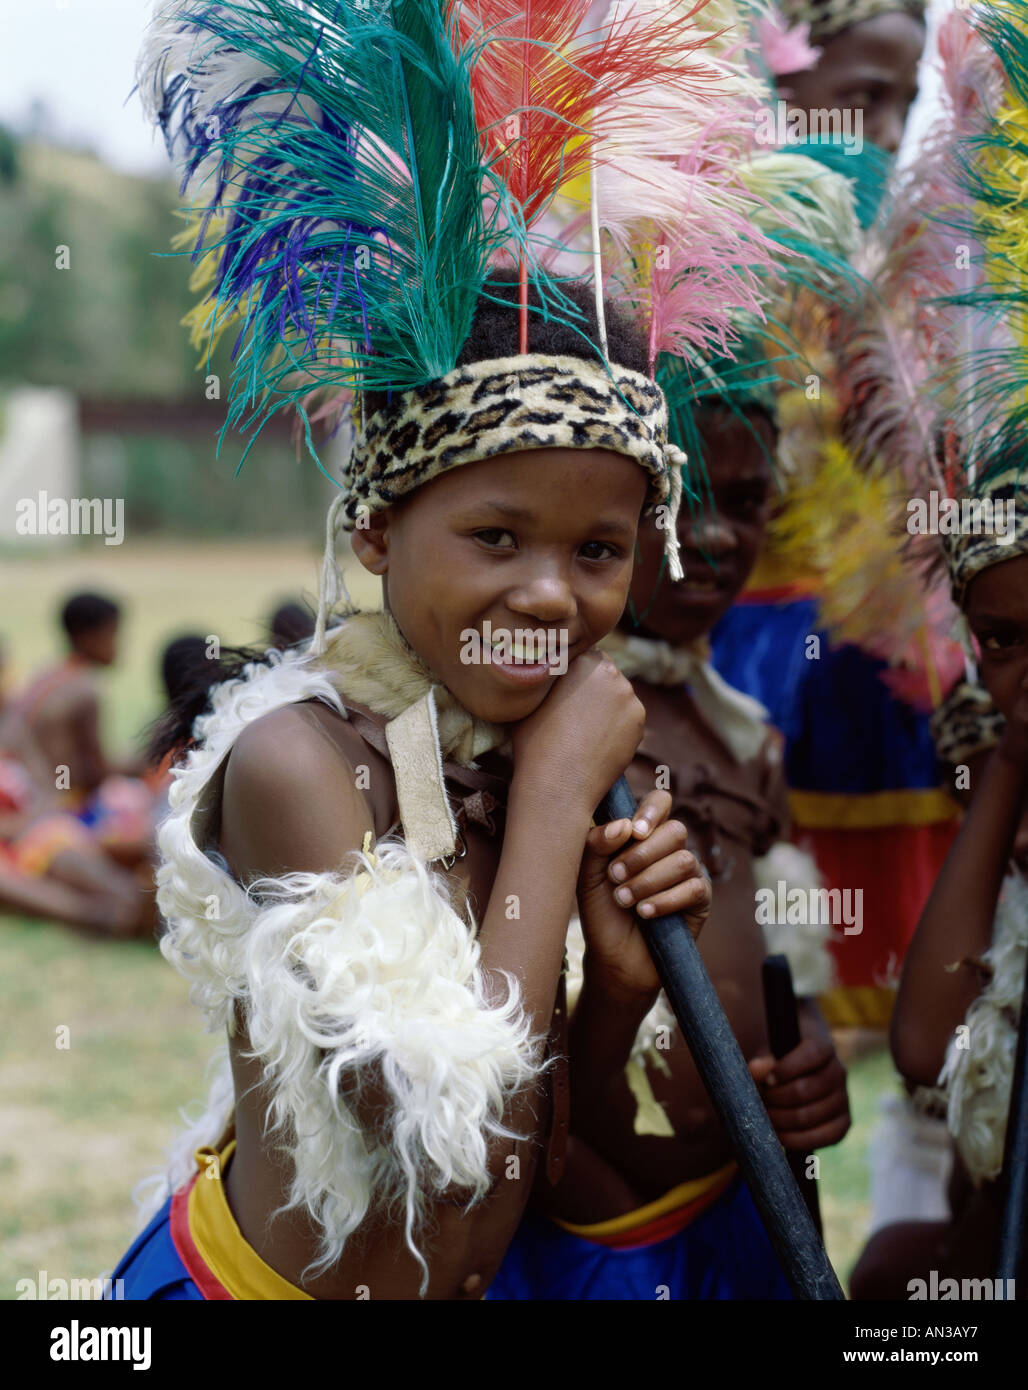 Zulu Boy vestito in costume nativo, Kwa Zulu Natal, Sud Africa Foto stock -  Alamy